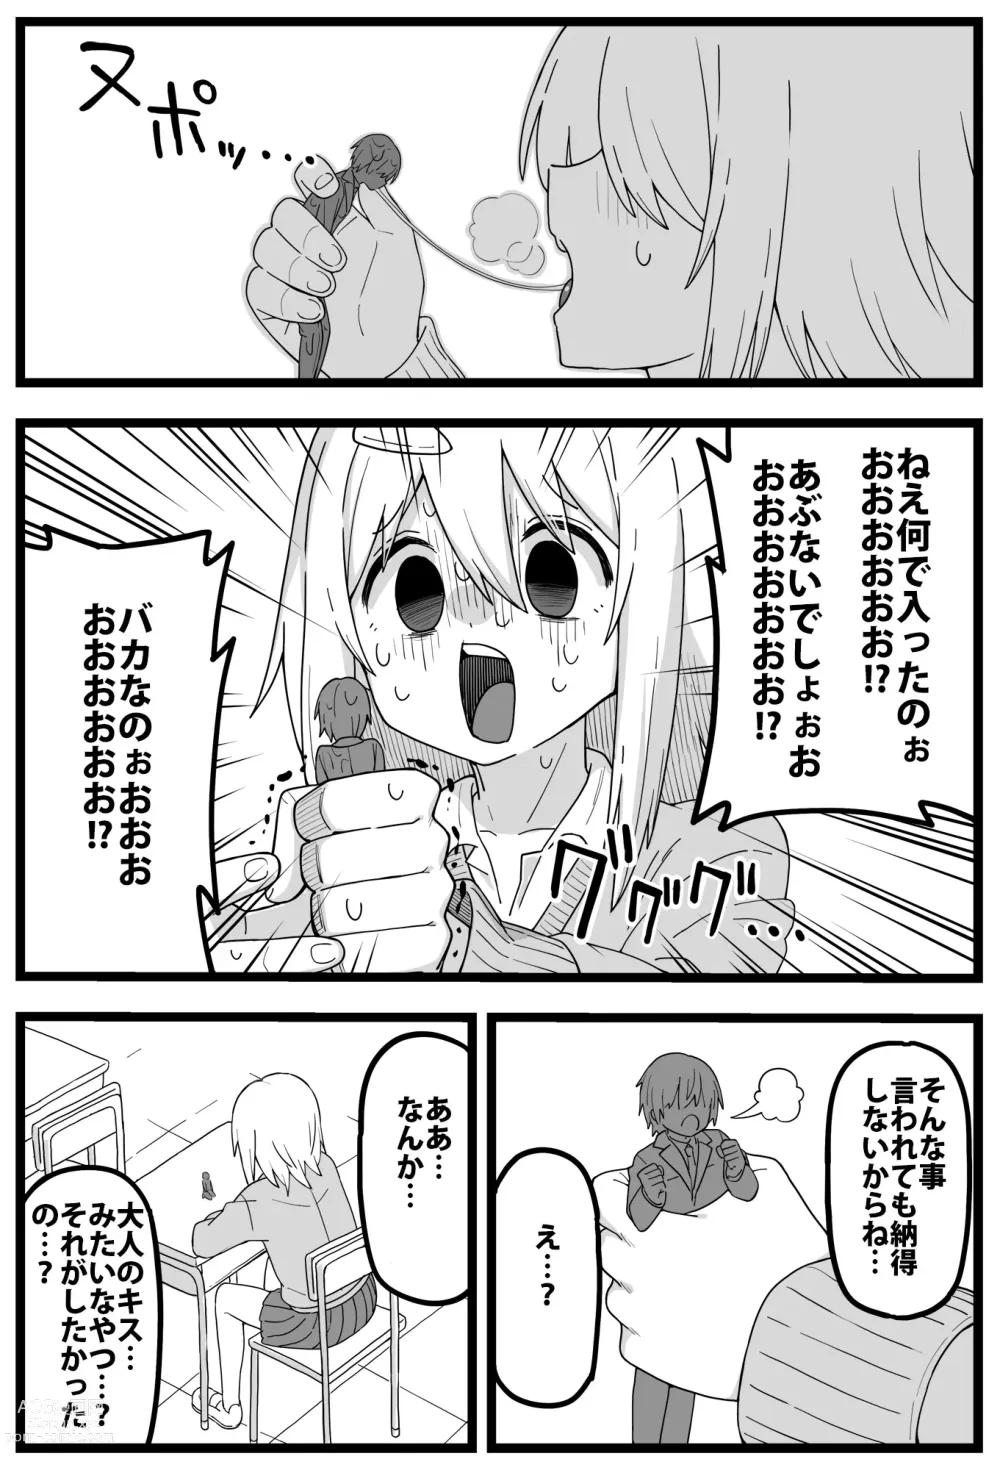 Page 9 of doujinshi Doushitemo Onnanoko ni Taberaretai Manga